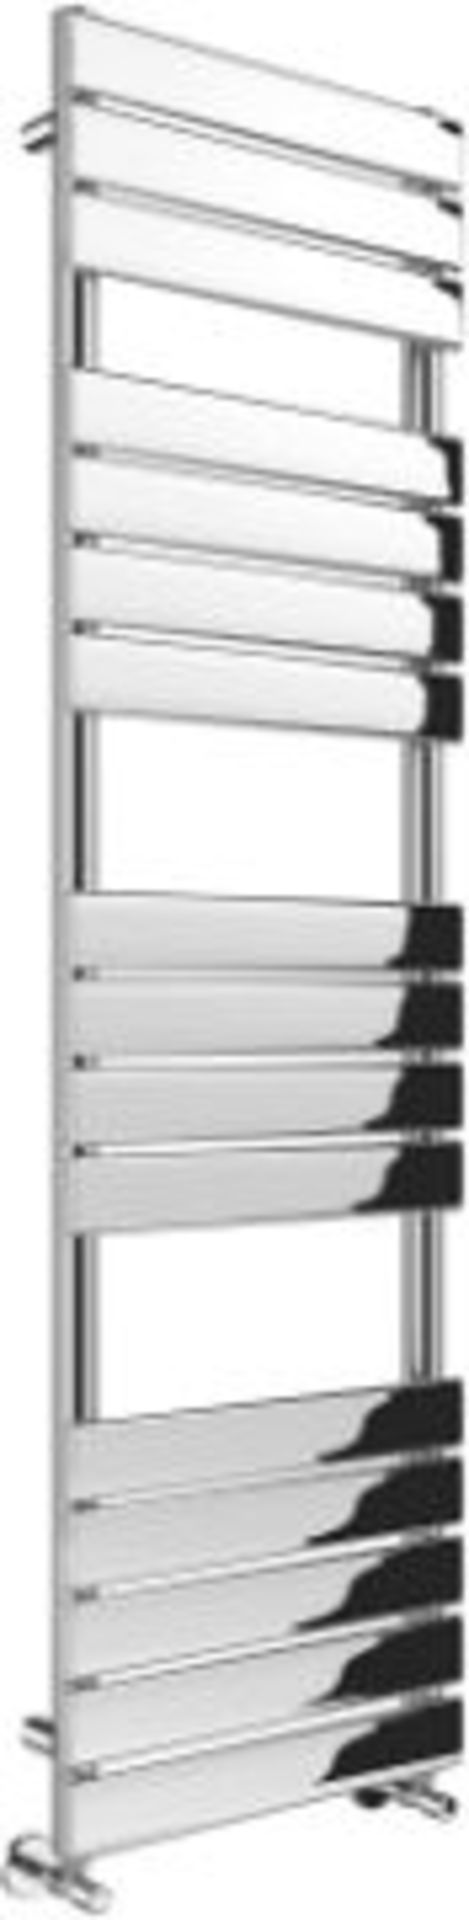 New & Boxed 1600x450mm Chrome Straight Towel Radiator Ladder Modern Bathroom. Rf1600450. - Image 2 of 2